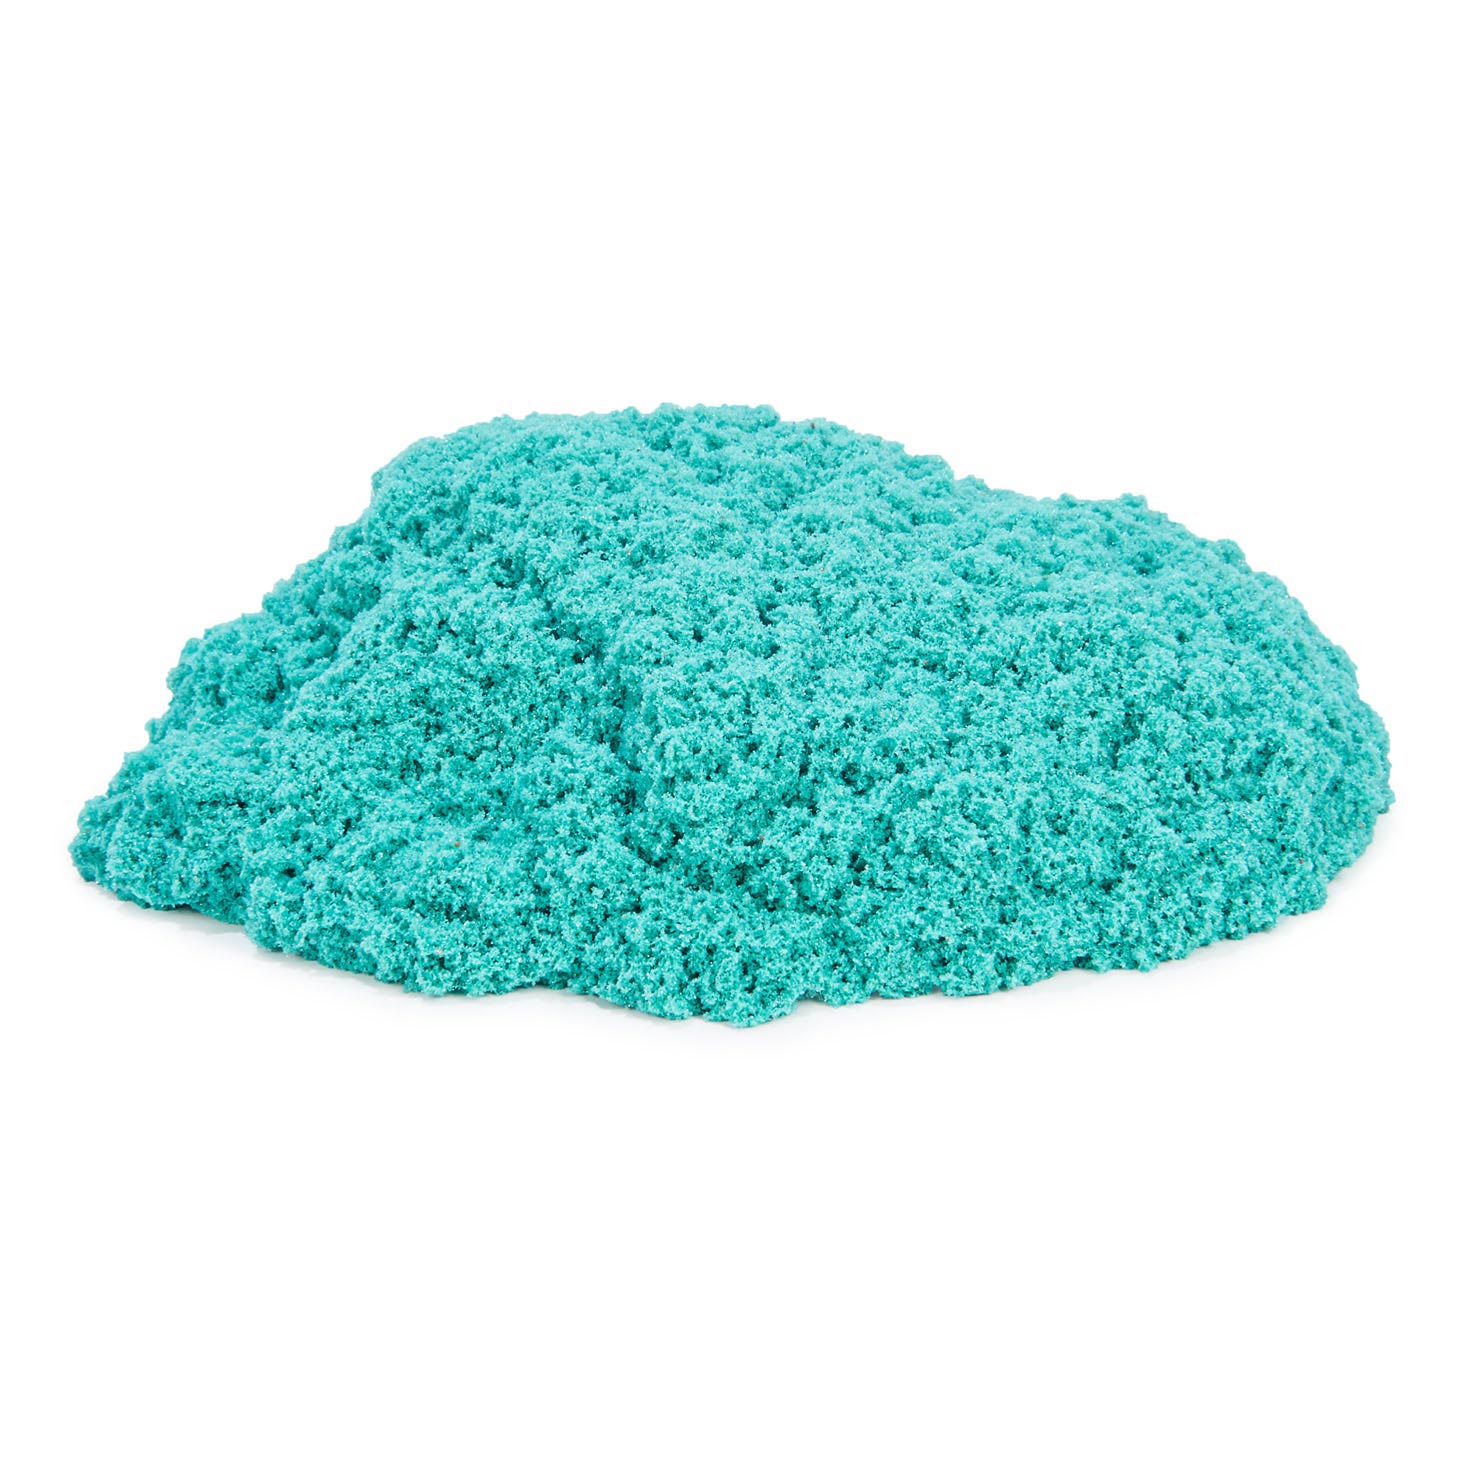 Kinetic Sand - Paillettes Bleu Vert, 907gr.